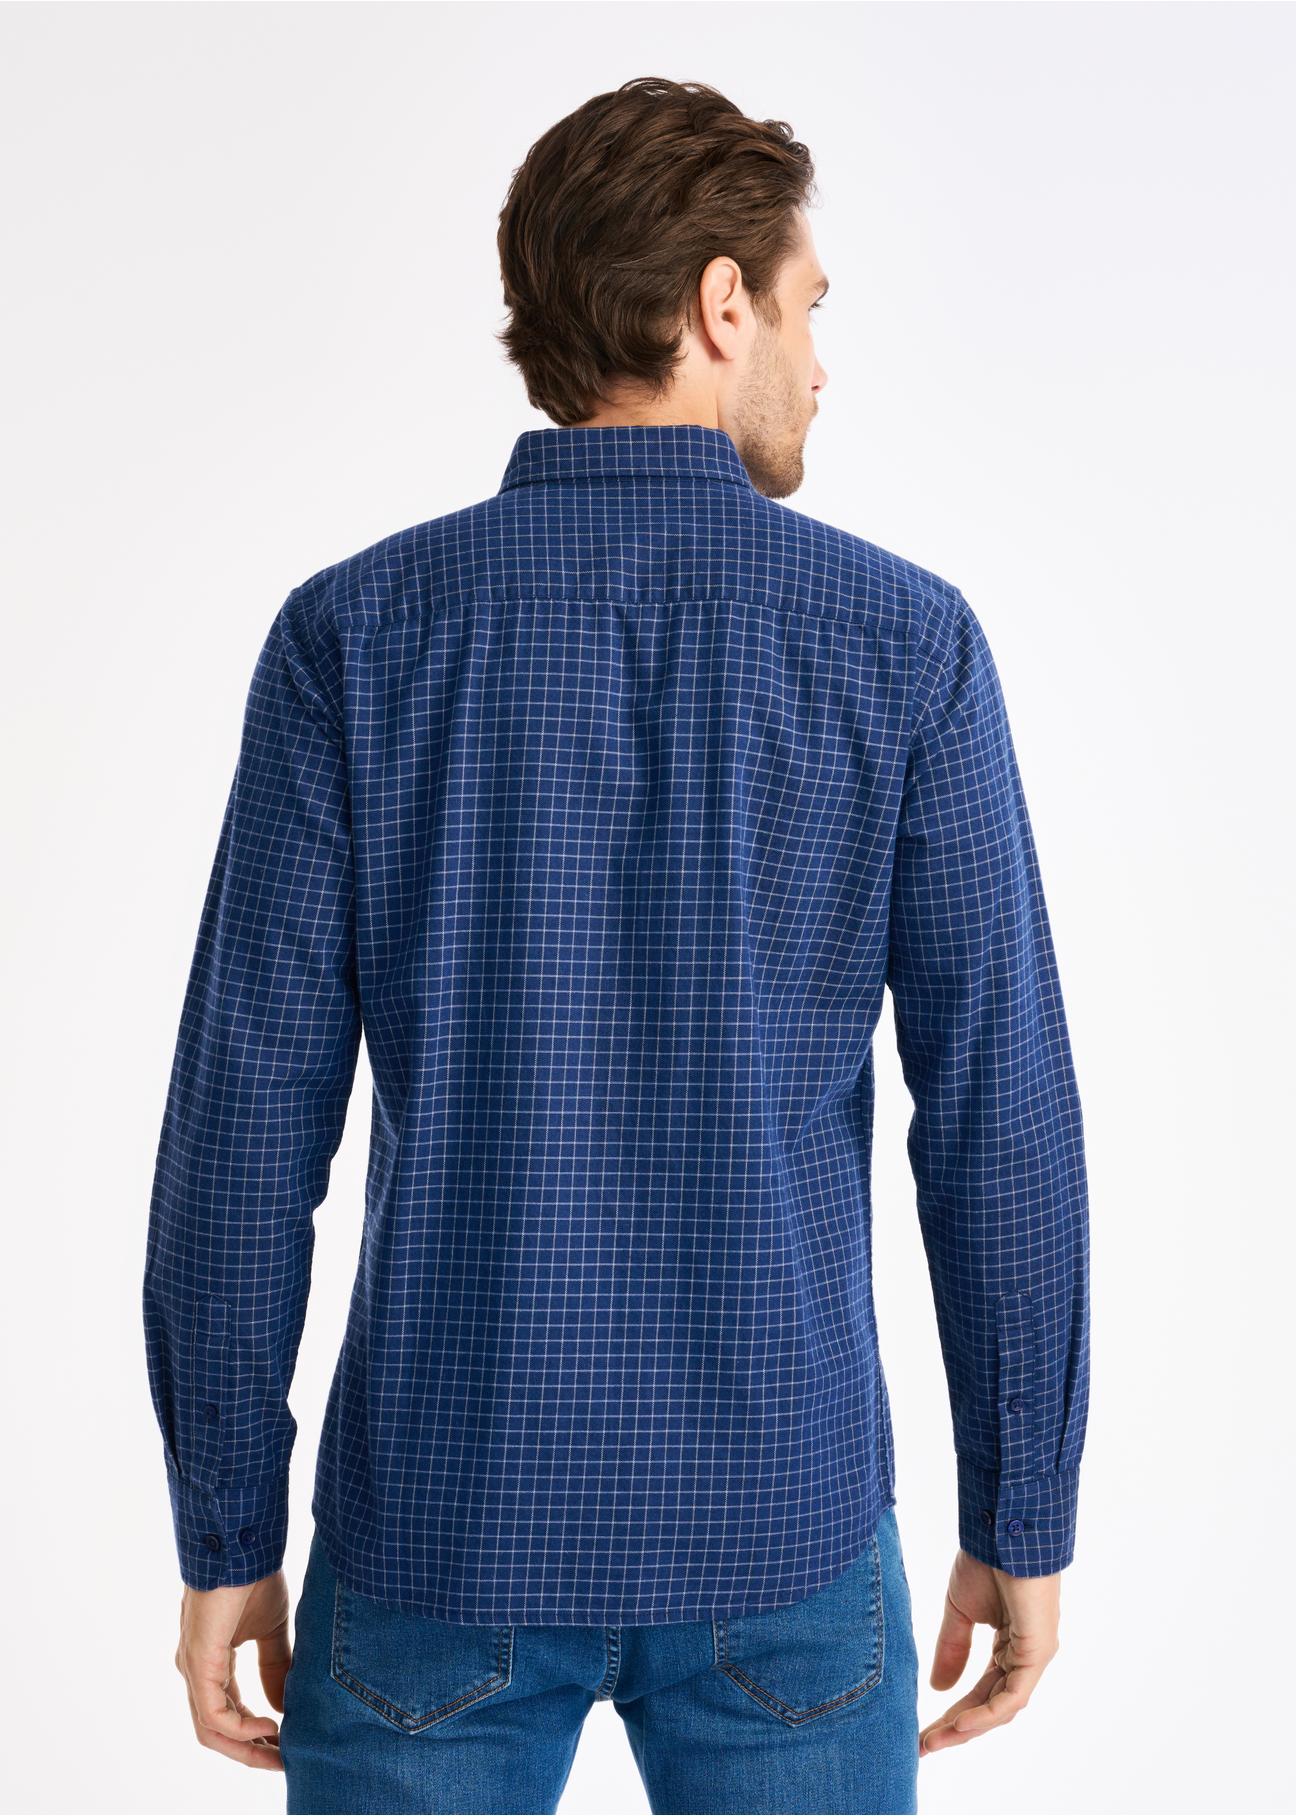 Granatowa koszula męska w kratkę KOSMT-0290-69(Z23)